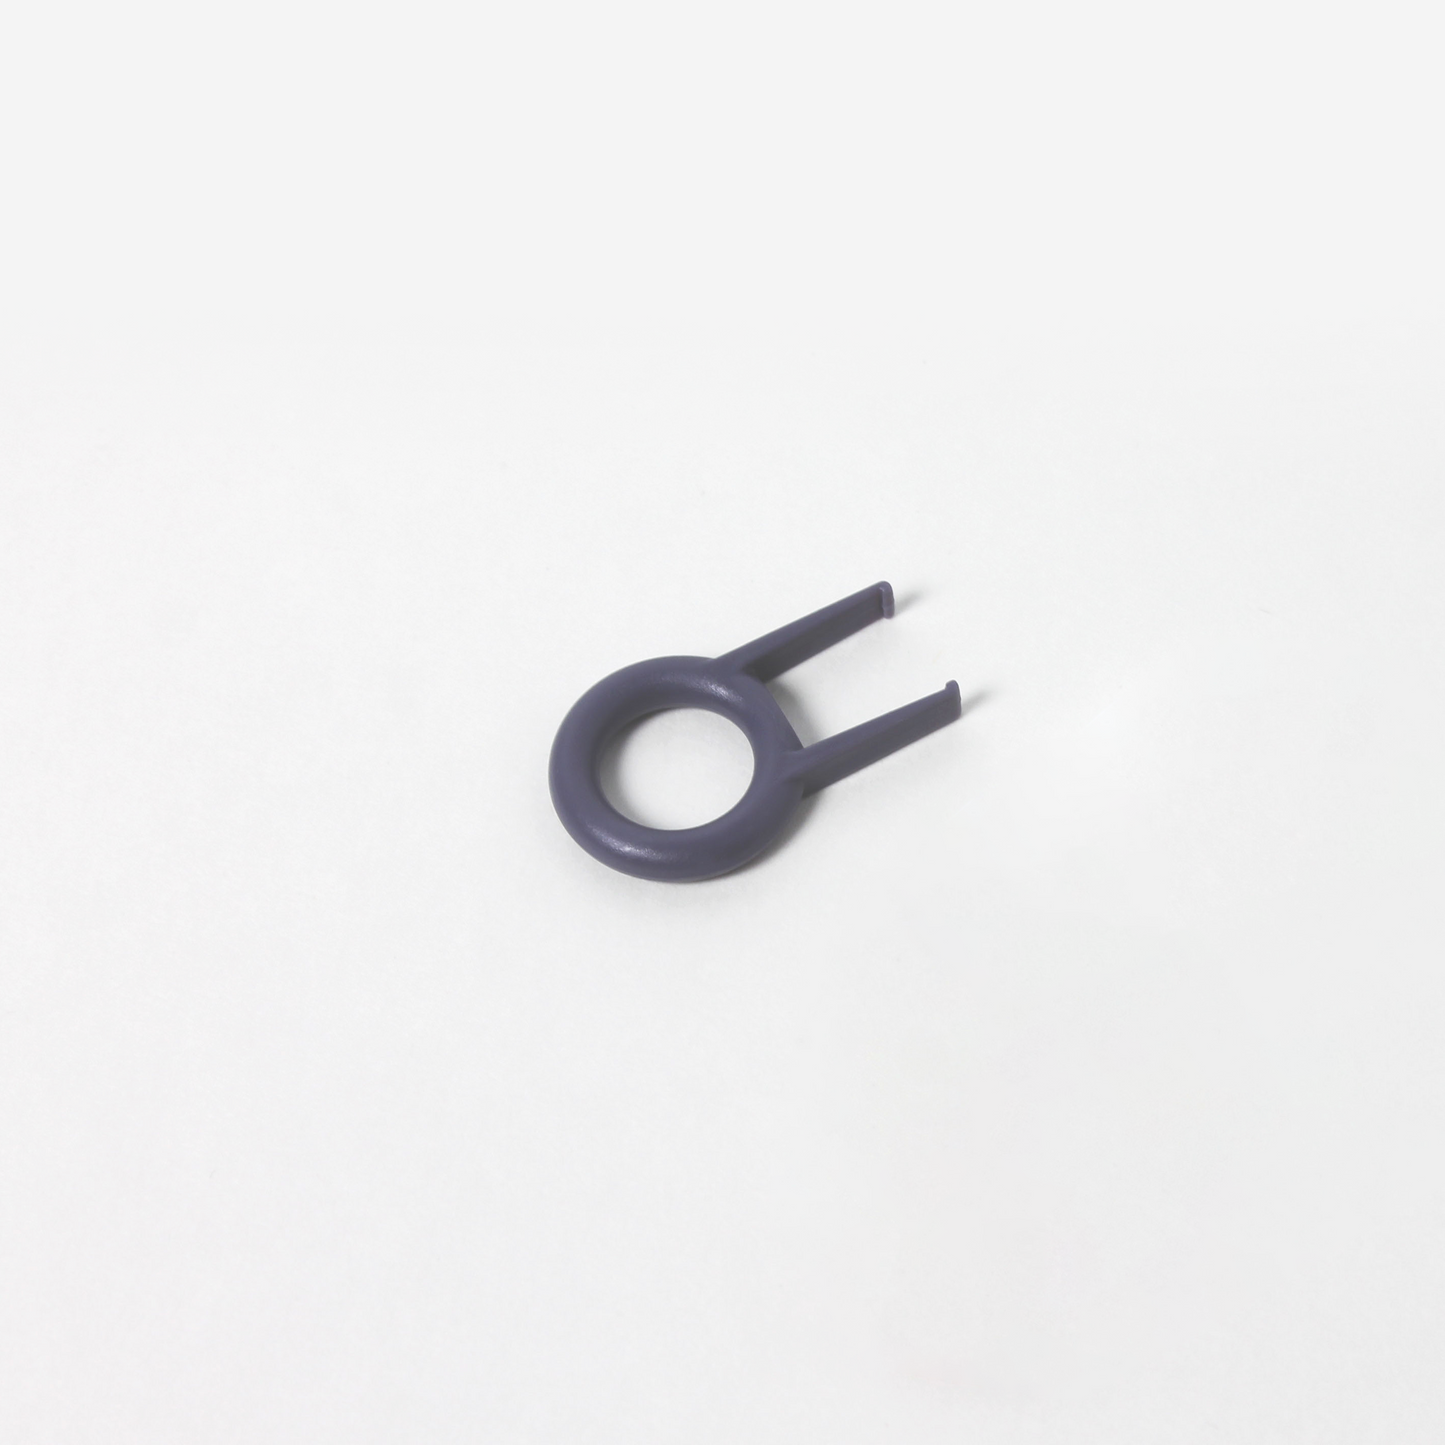 basic keycap puller